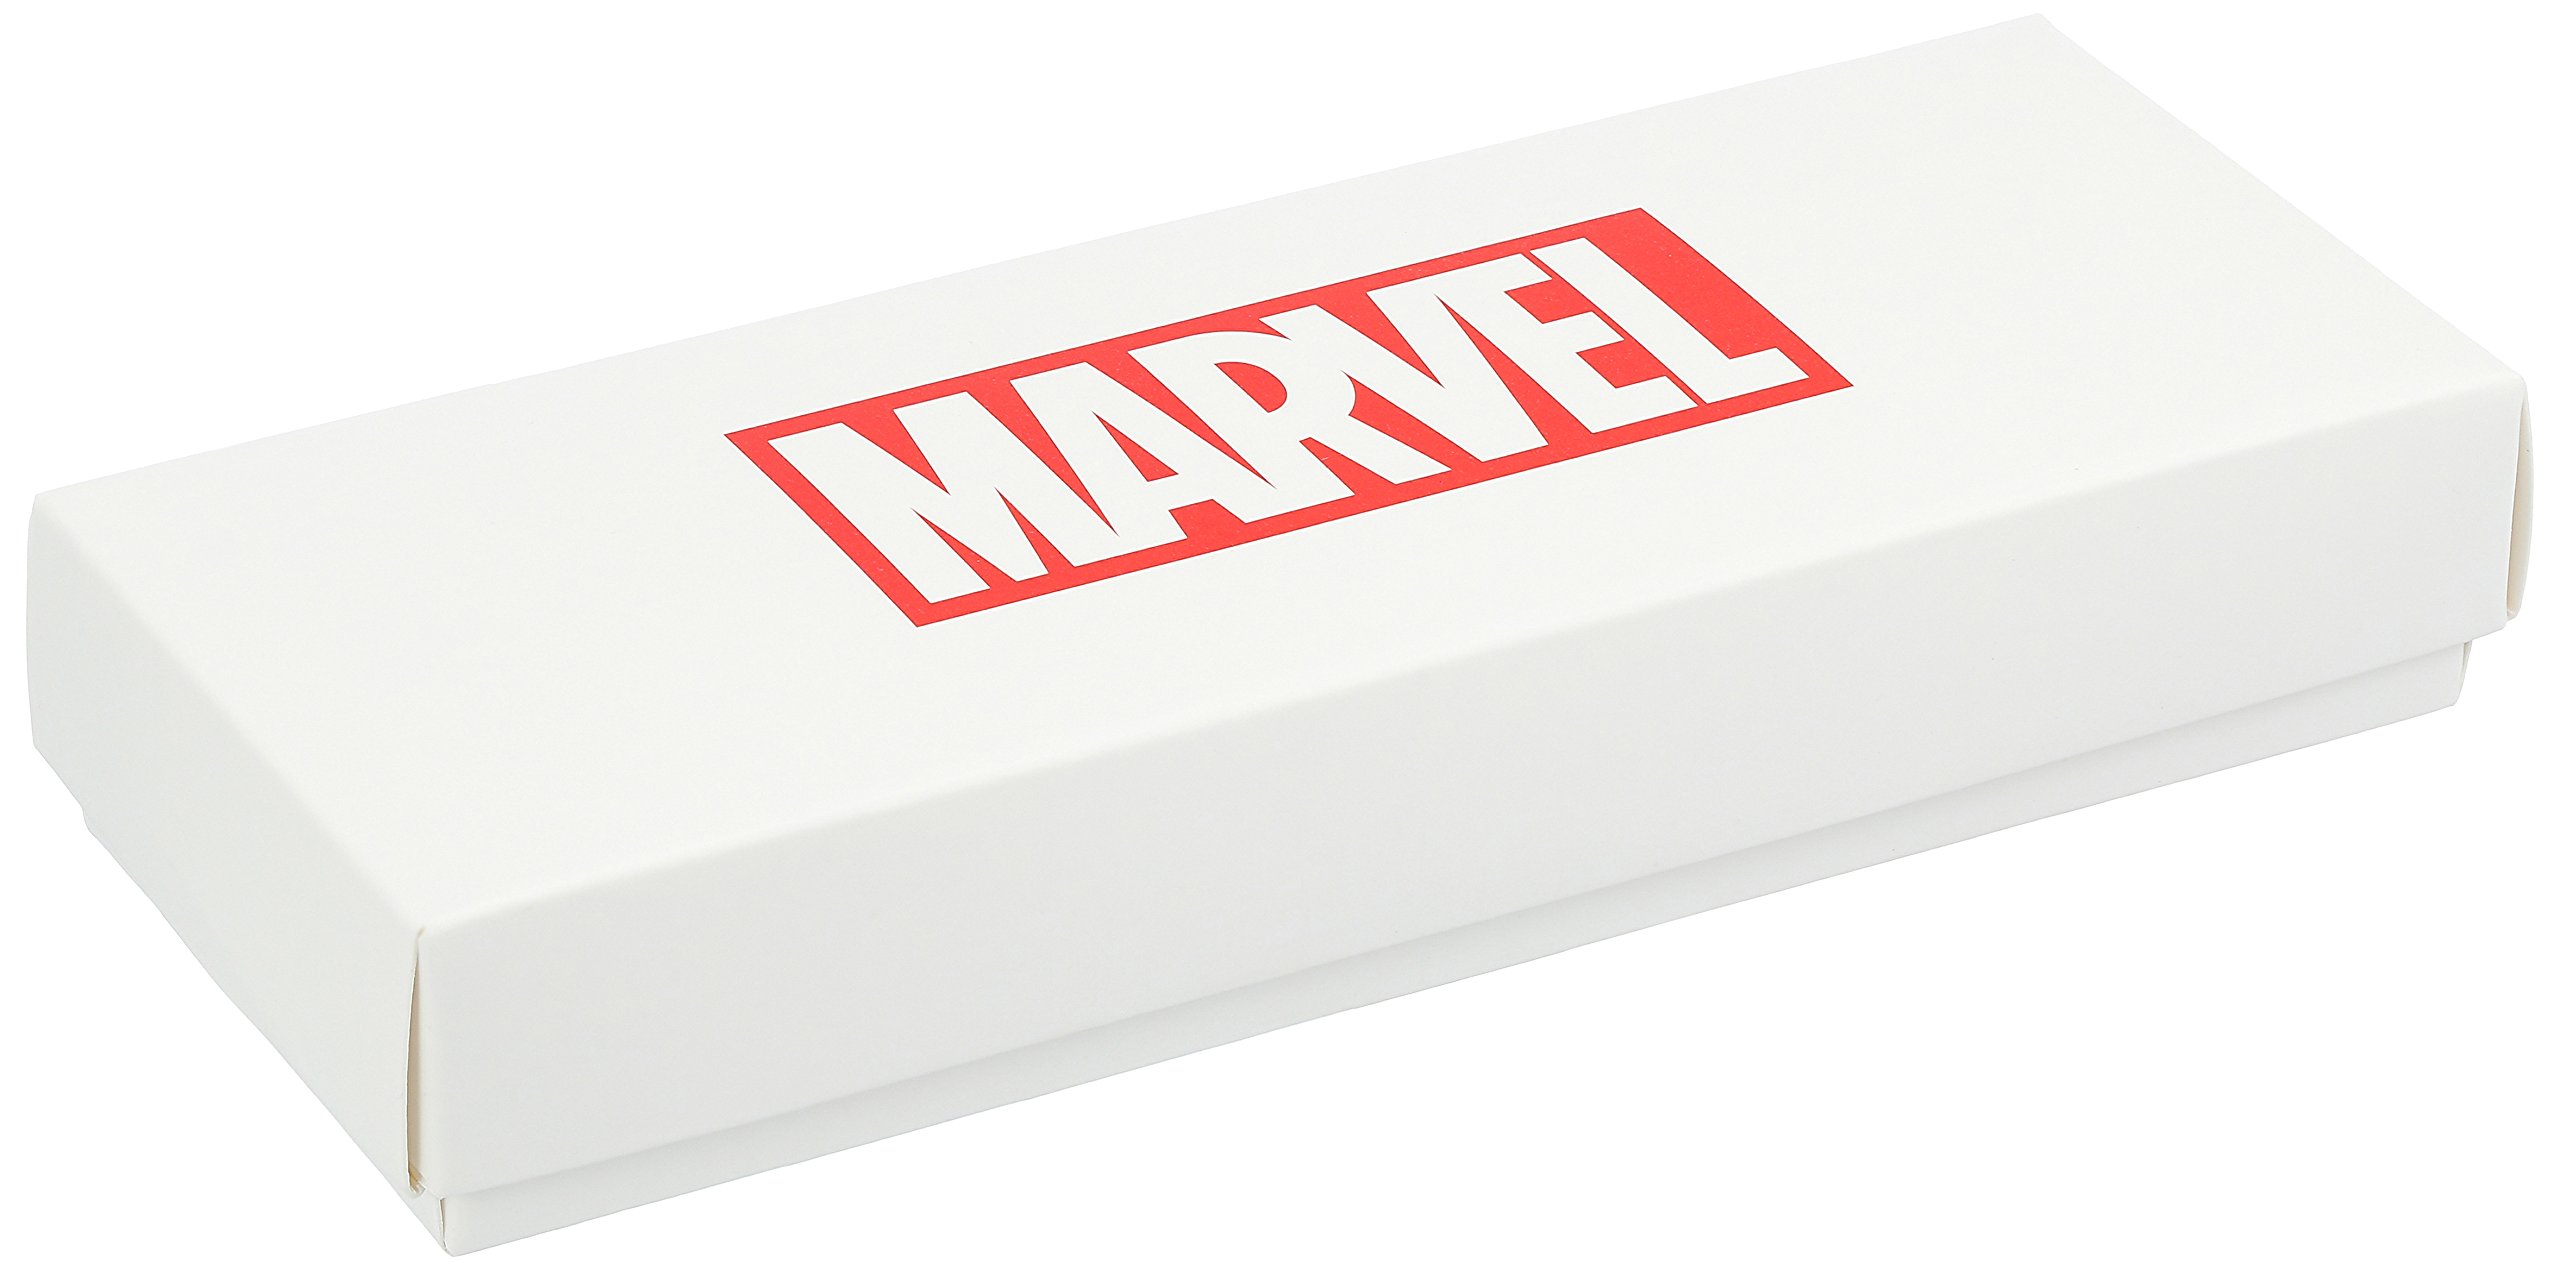 Marvel Kids' Plastic Time Teacher Analog Quartz Nylon Strap Watch